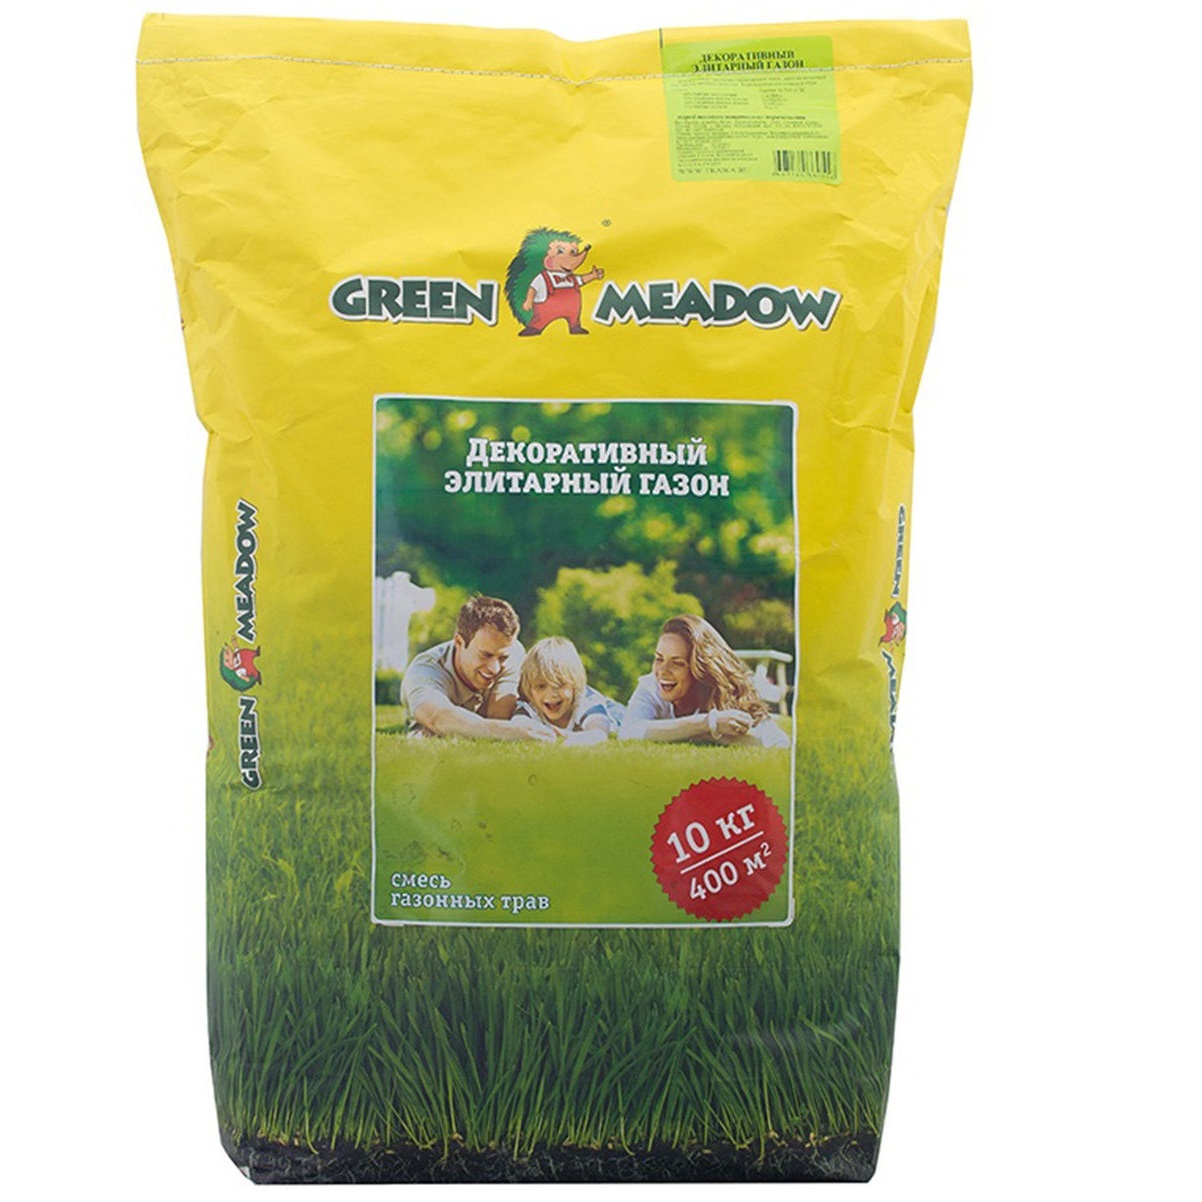 Газон Green Meadow декоративный элитарный 10 кг семена газона декоративный элитарный green meadow 1 кг х 2 шт 2 кг